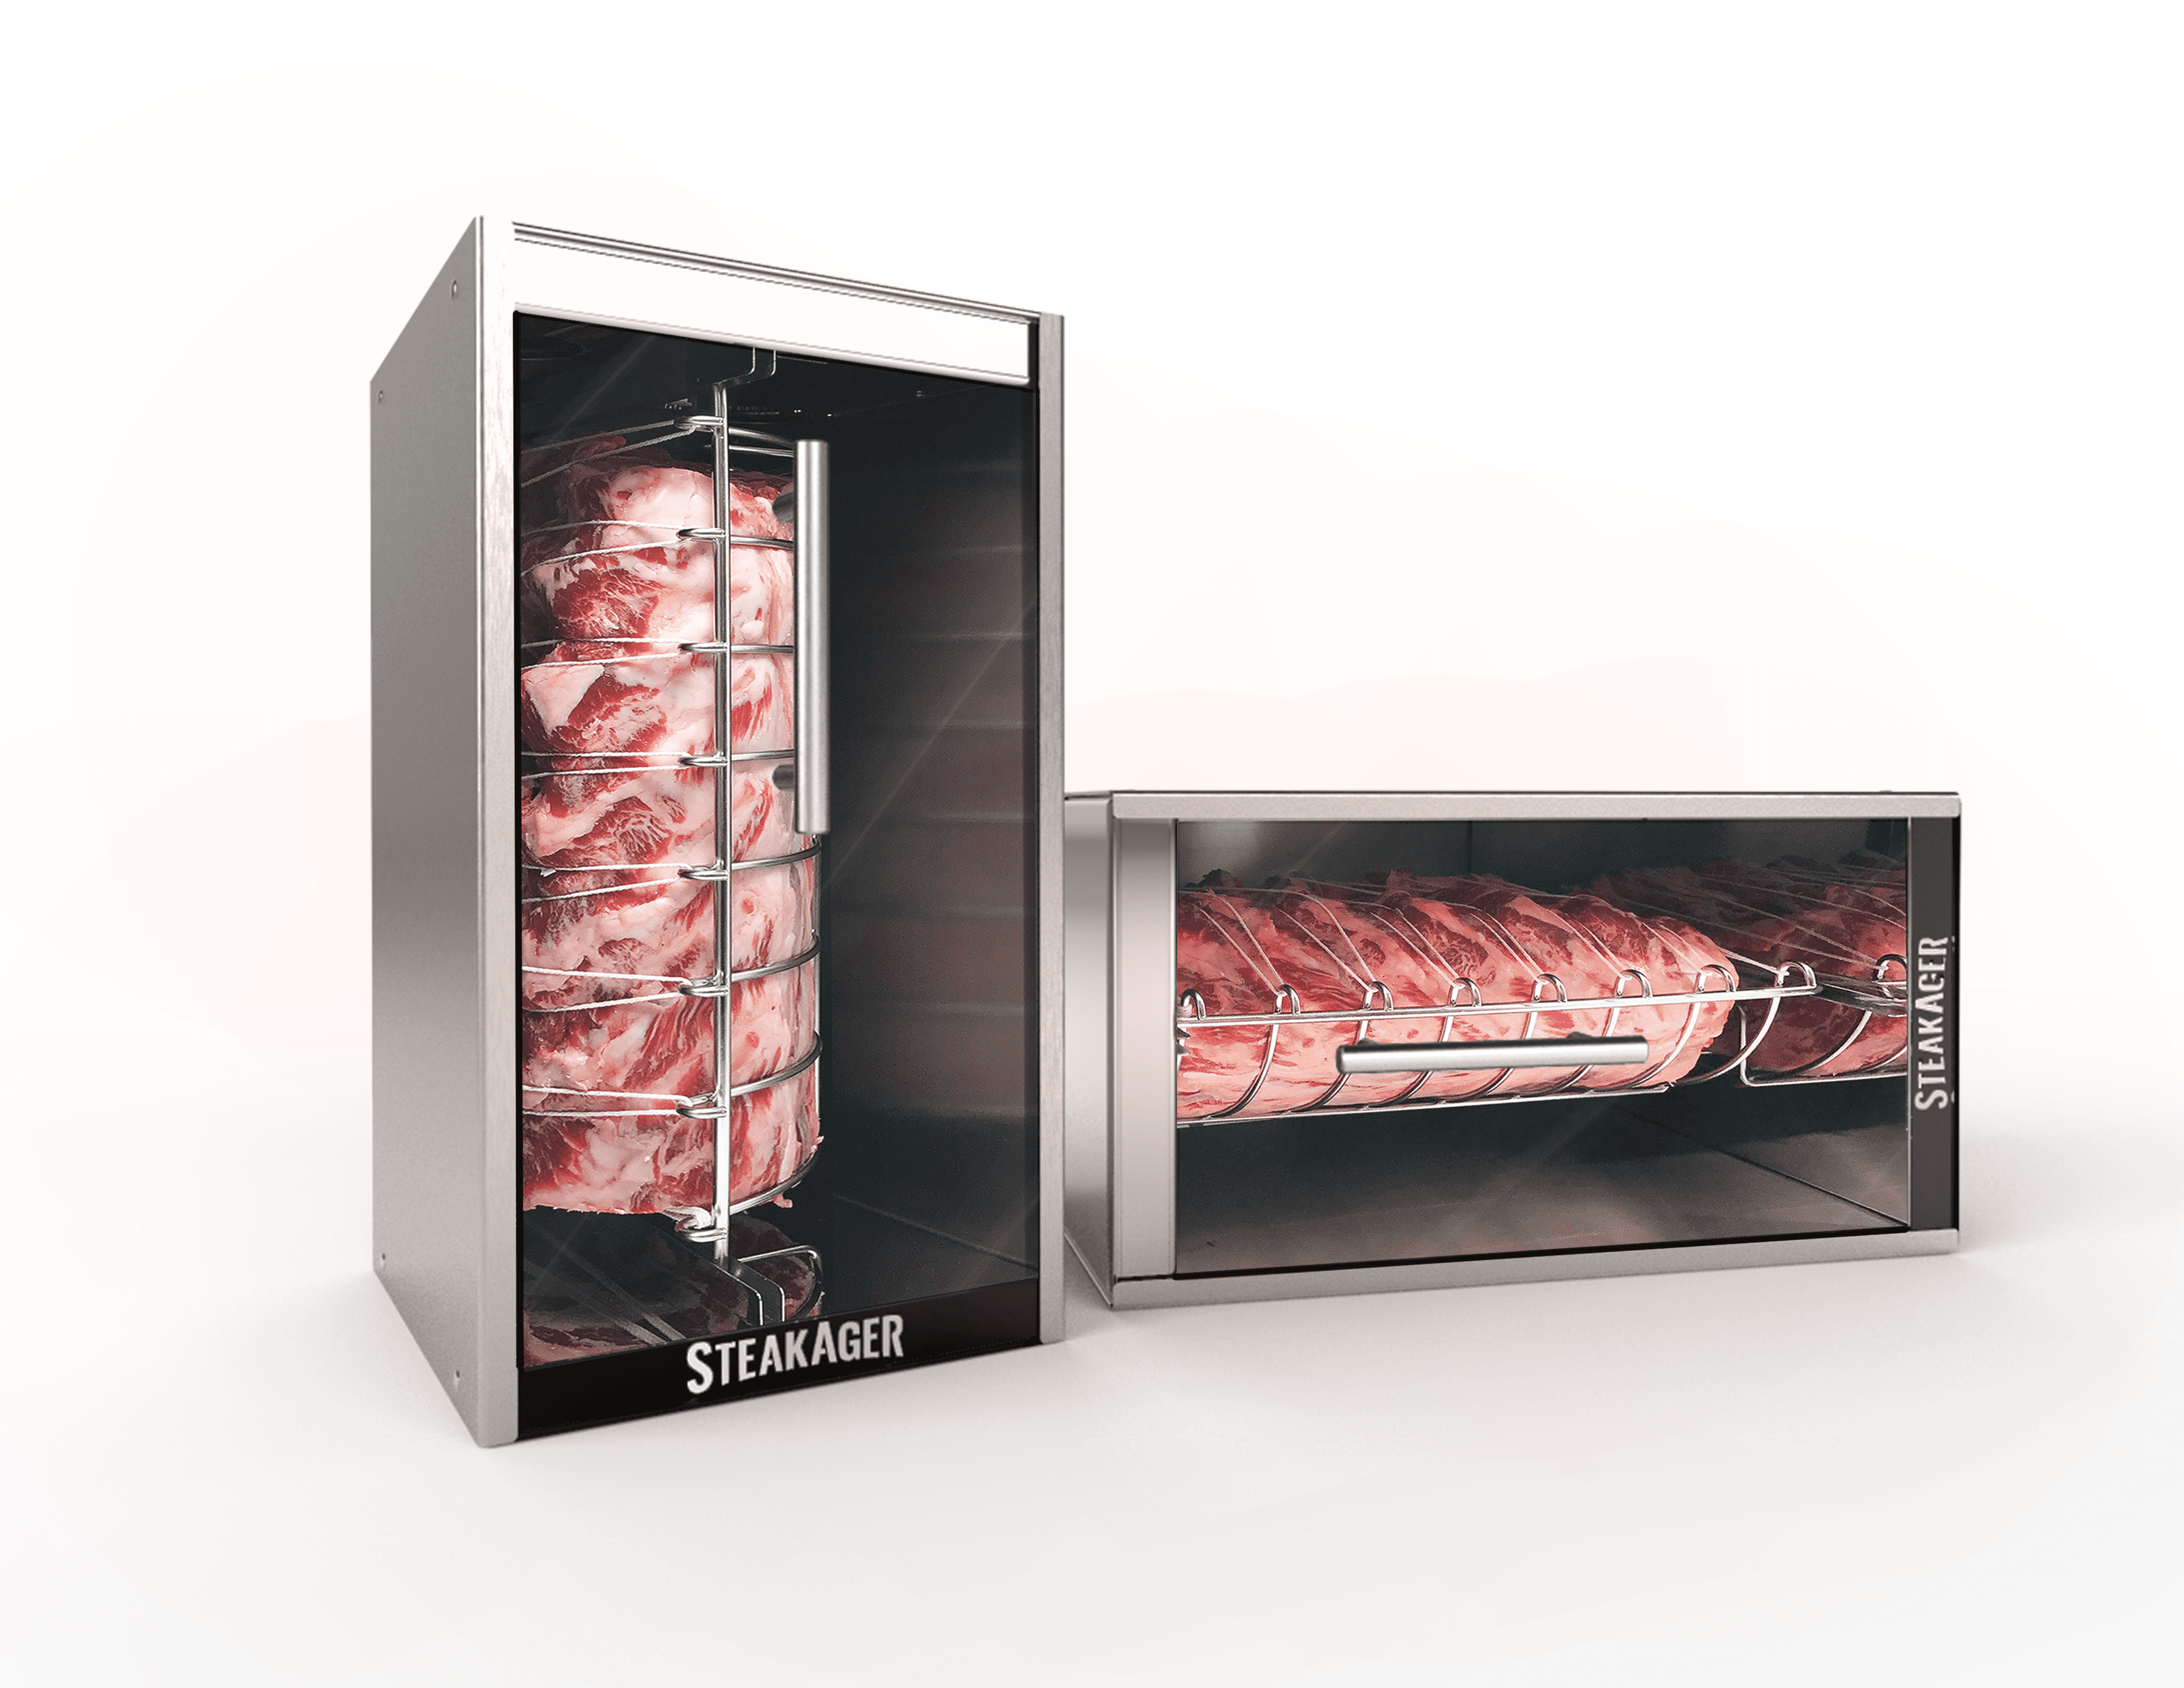  Kolice Commercial Aging Beef Showcase Freezer, Steak